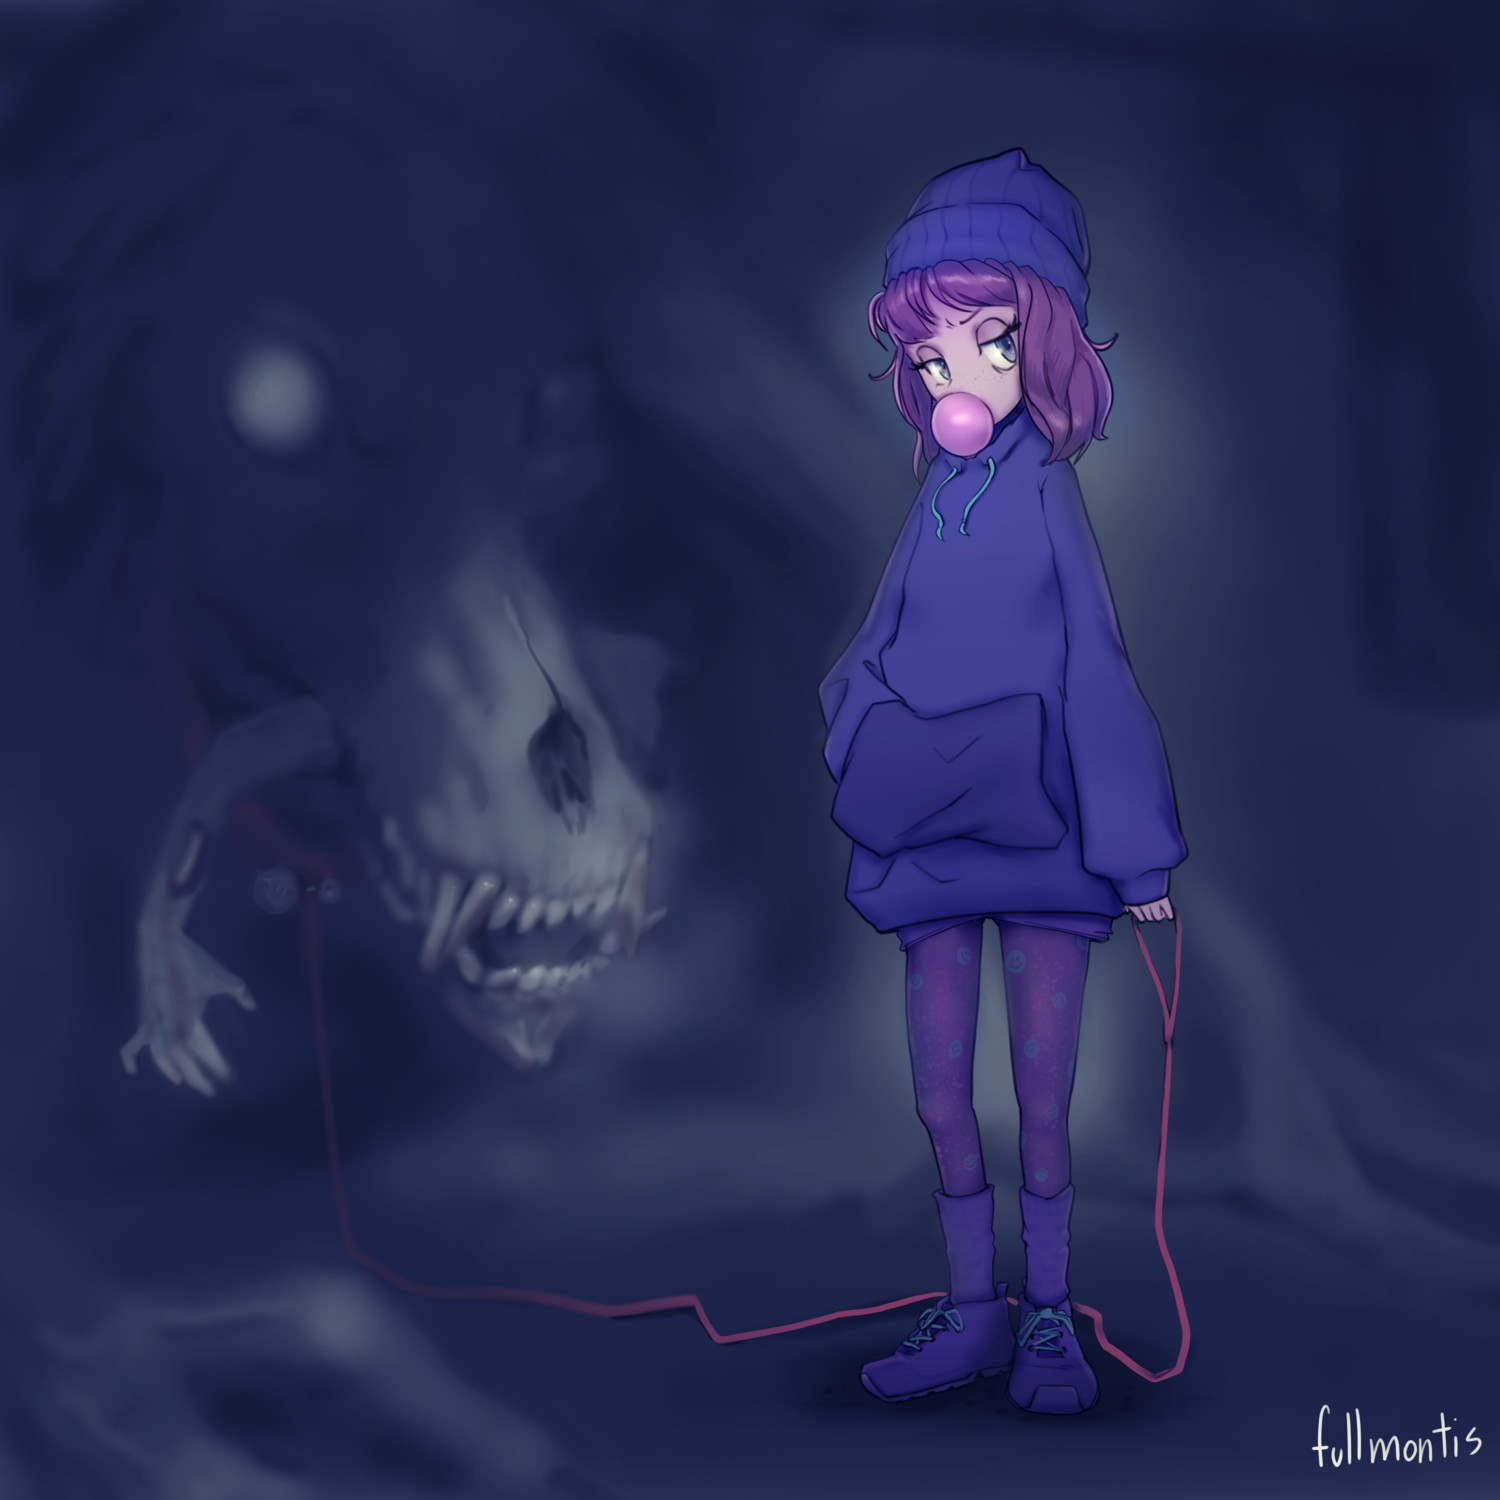 anime girl with a creepy monster pet on a leash